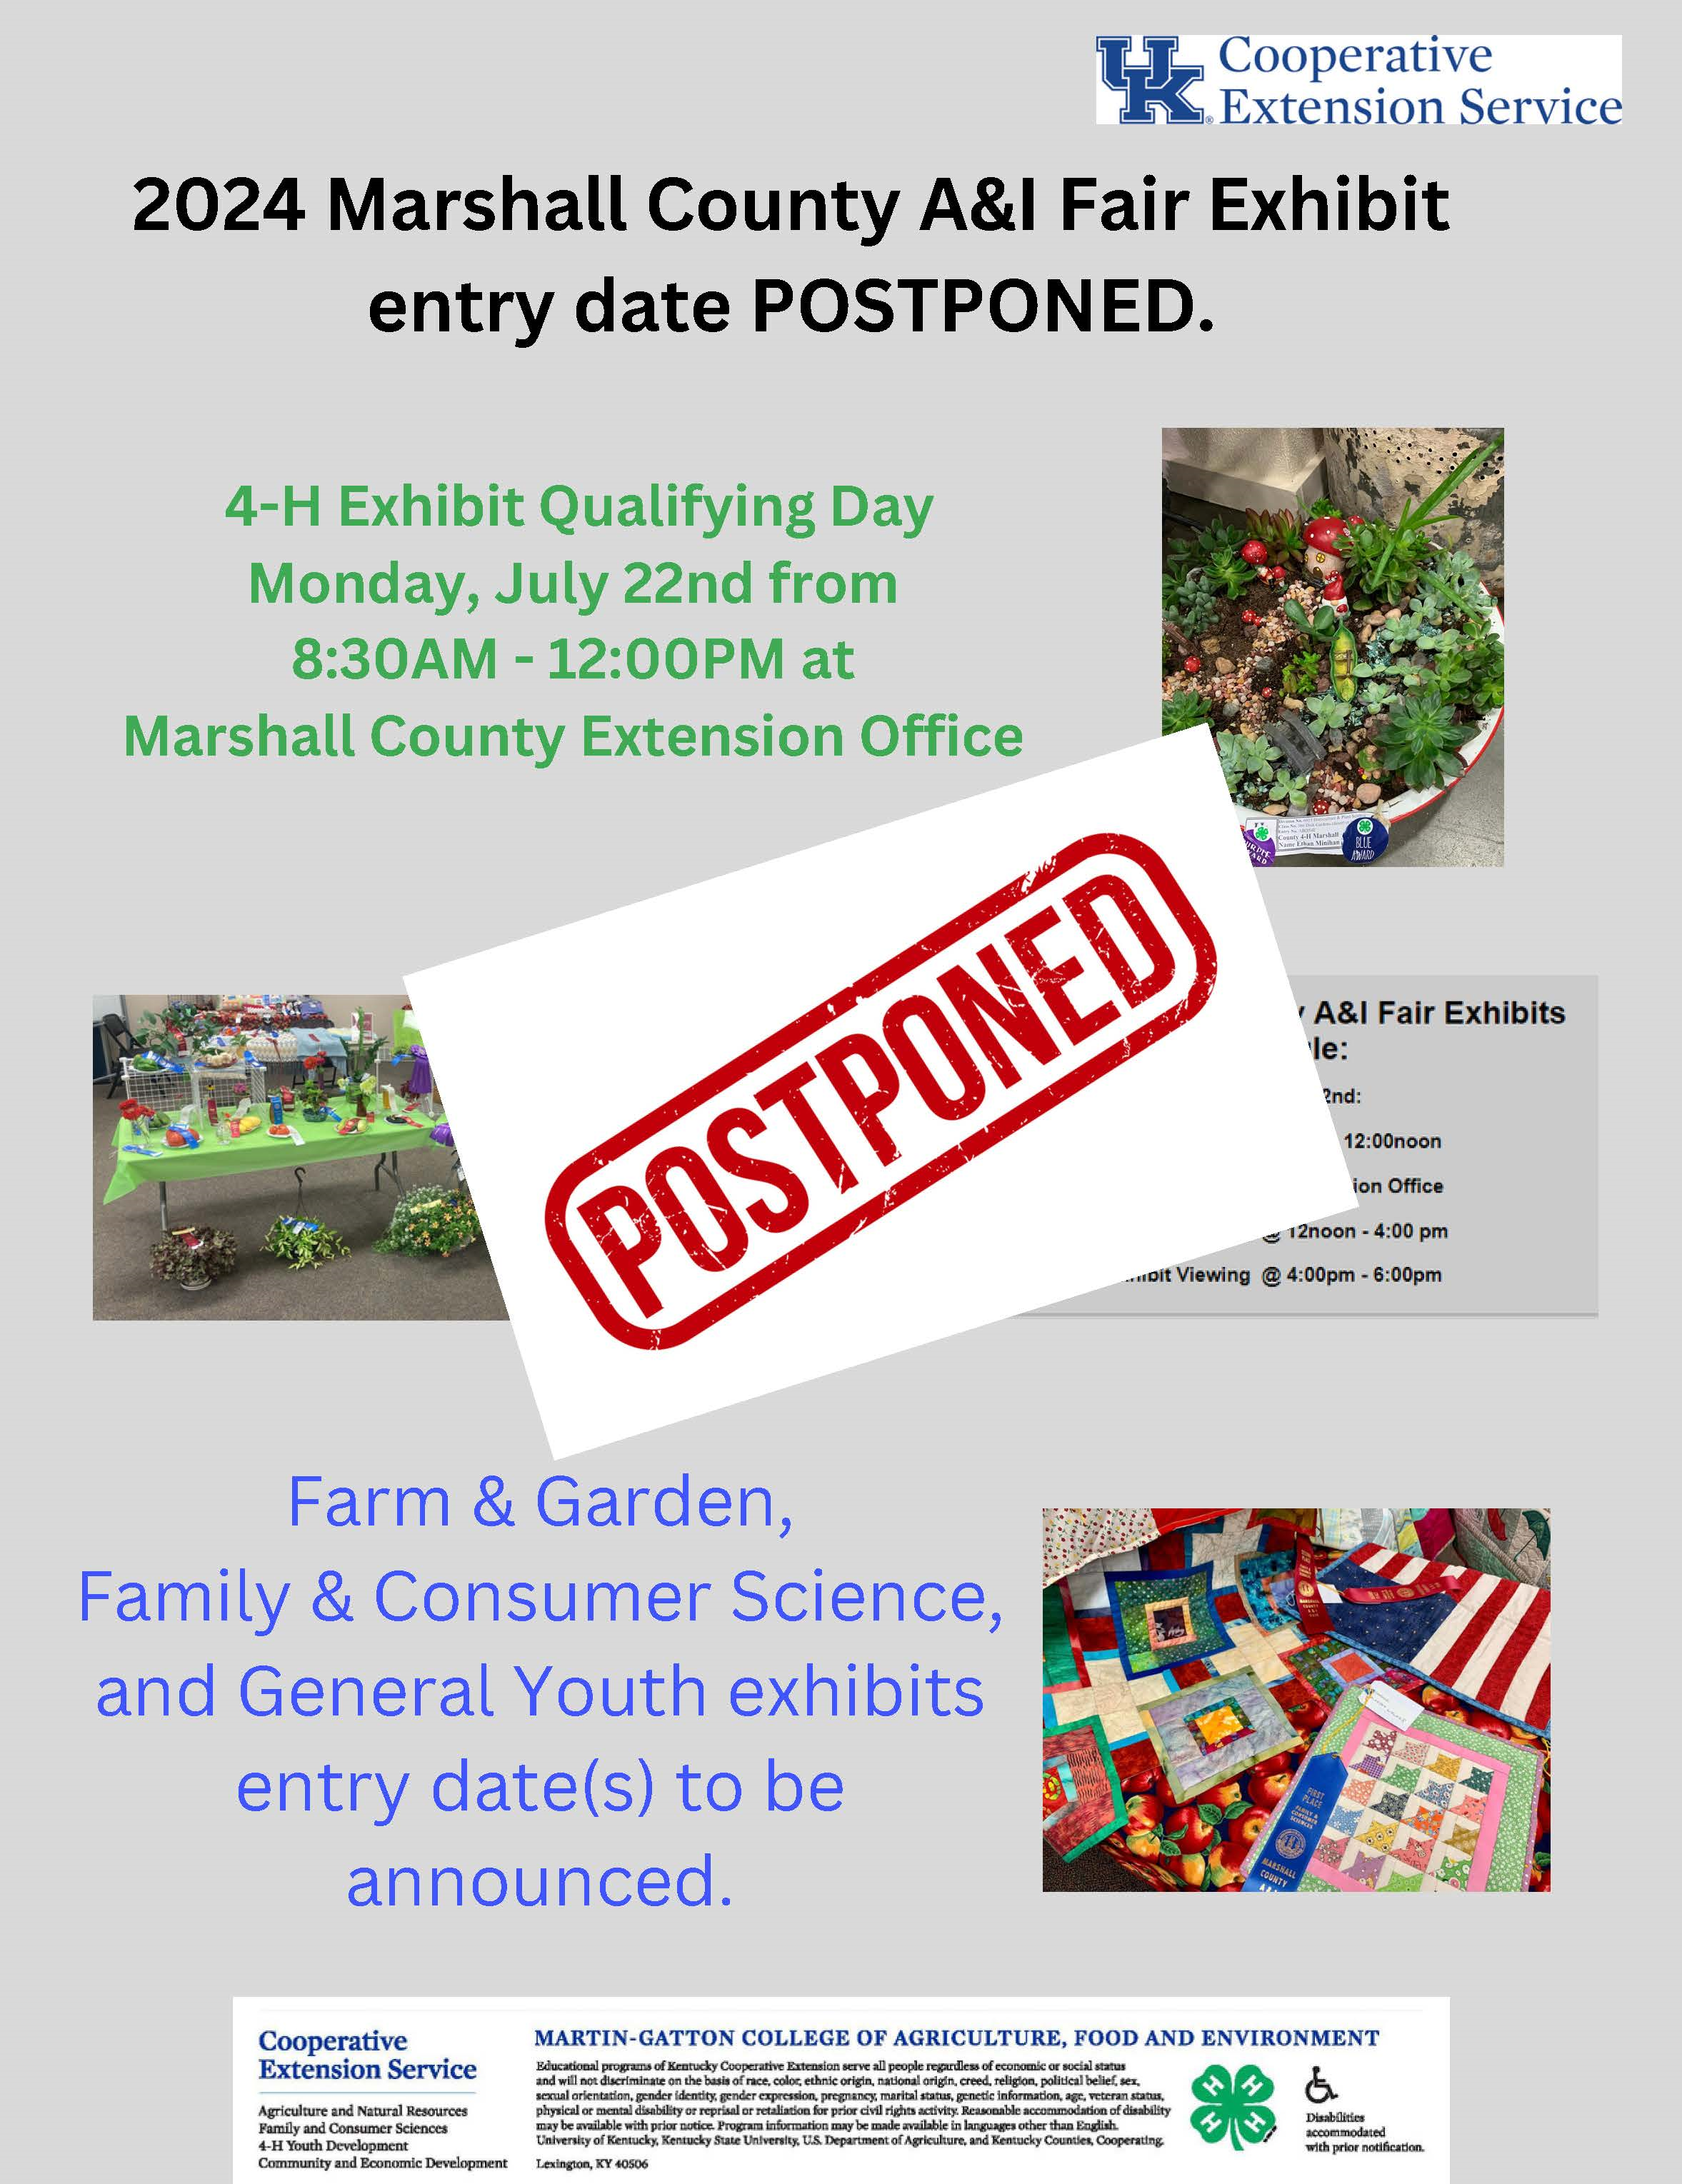 Marshall County A&I Fair 2024 Postponed 